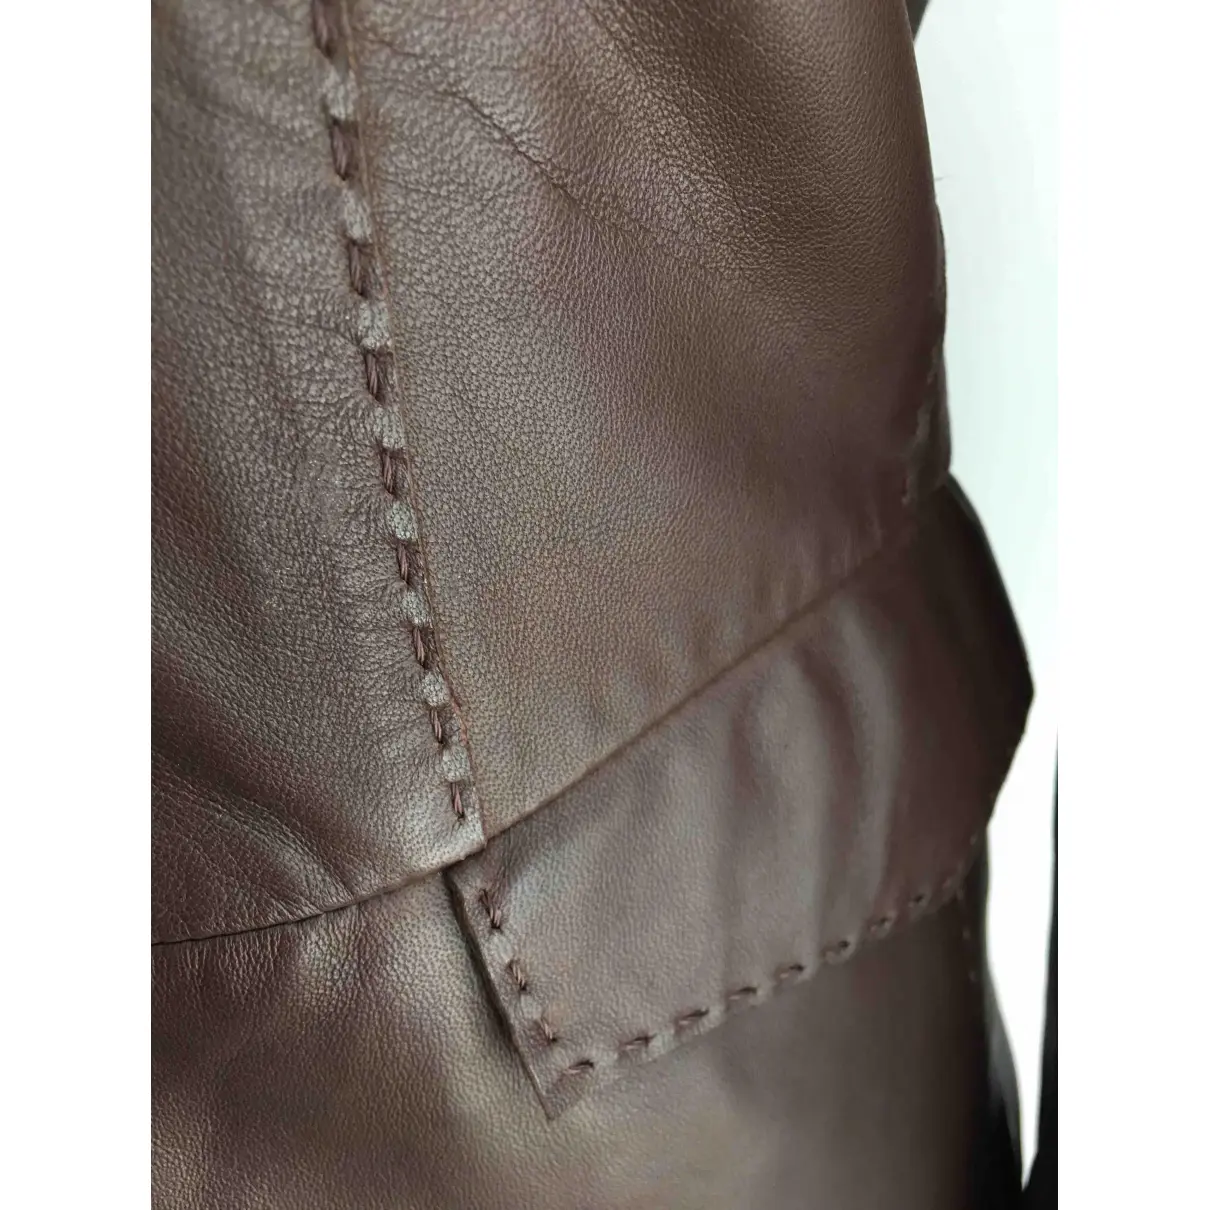 Leather blazer Faconnable